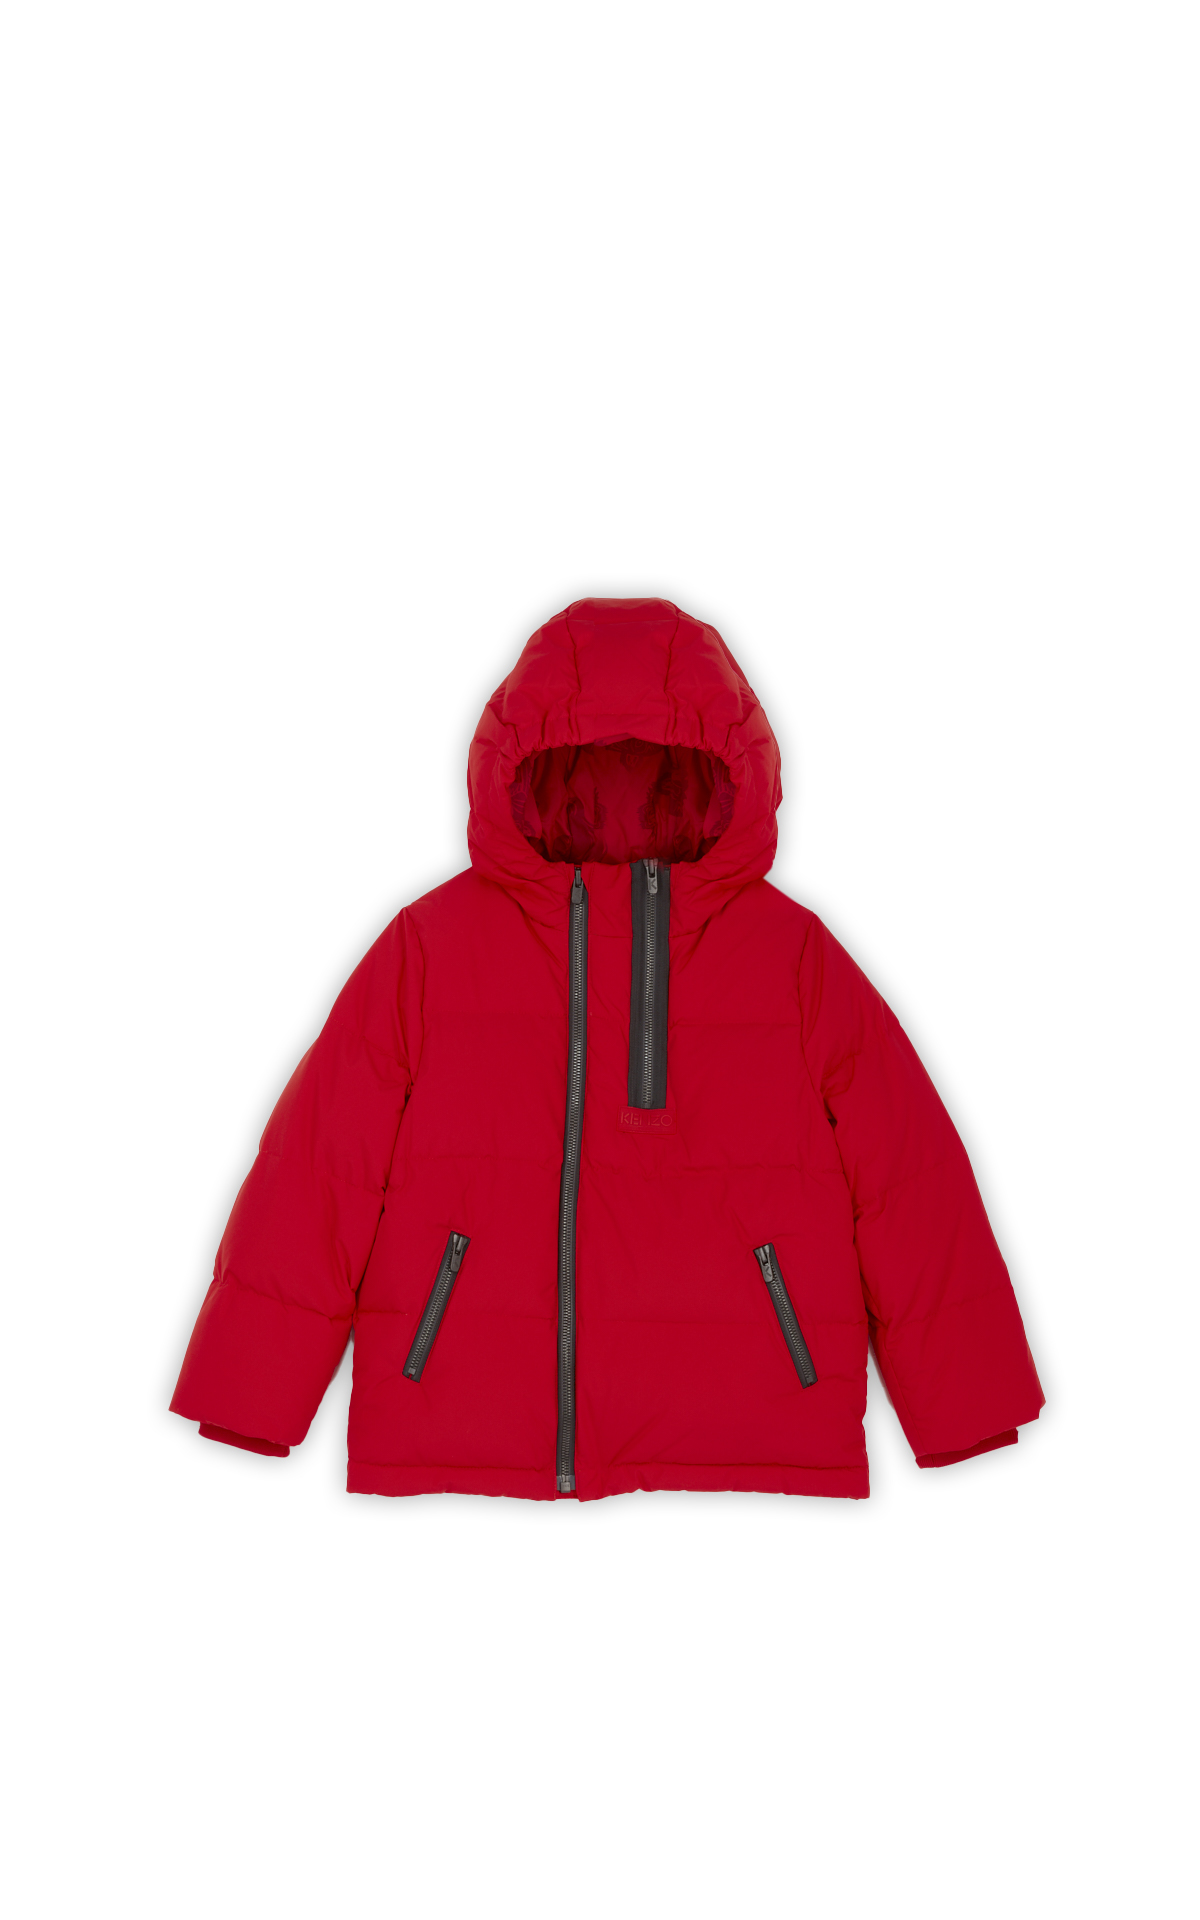 Kenzo red hooded jacket*